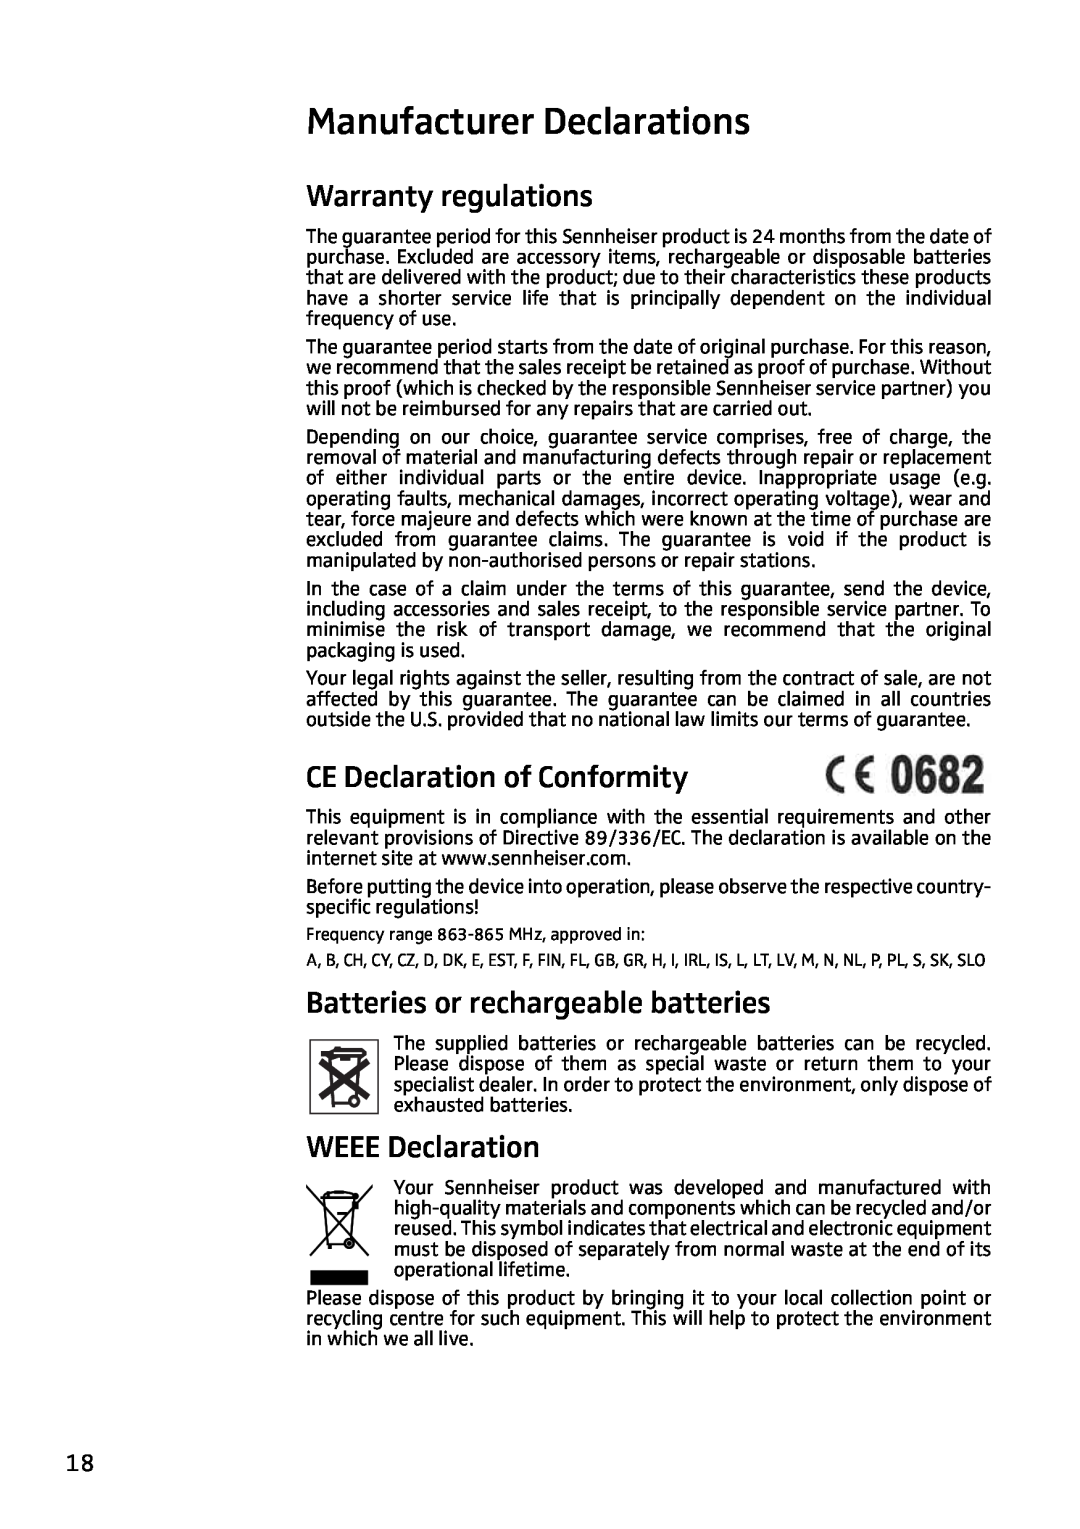 Sennheiser RS4200 manual Manufacturer Declarations, Warranty regulations, CE Declaration of Conformity, WEEE Declaration 